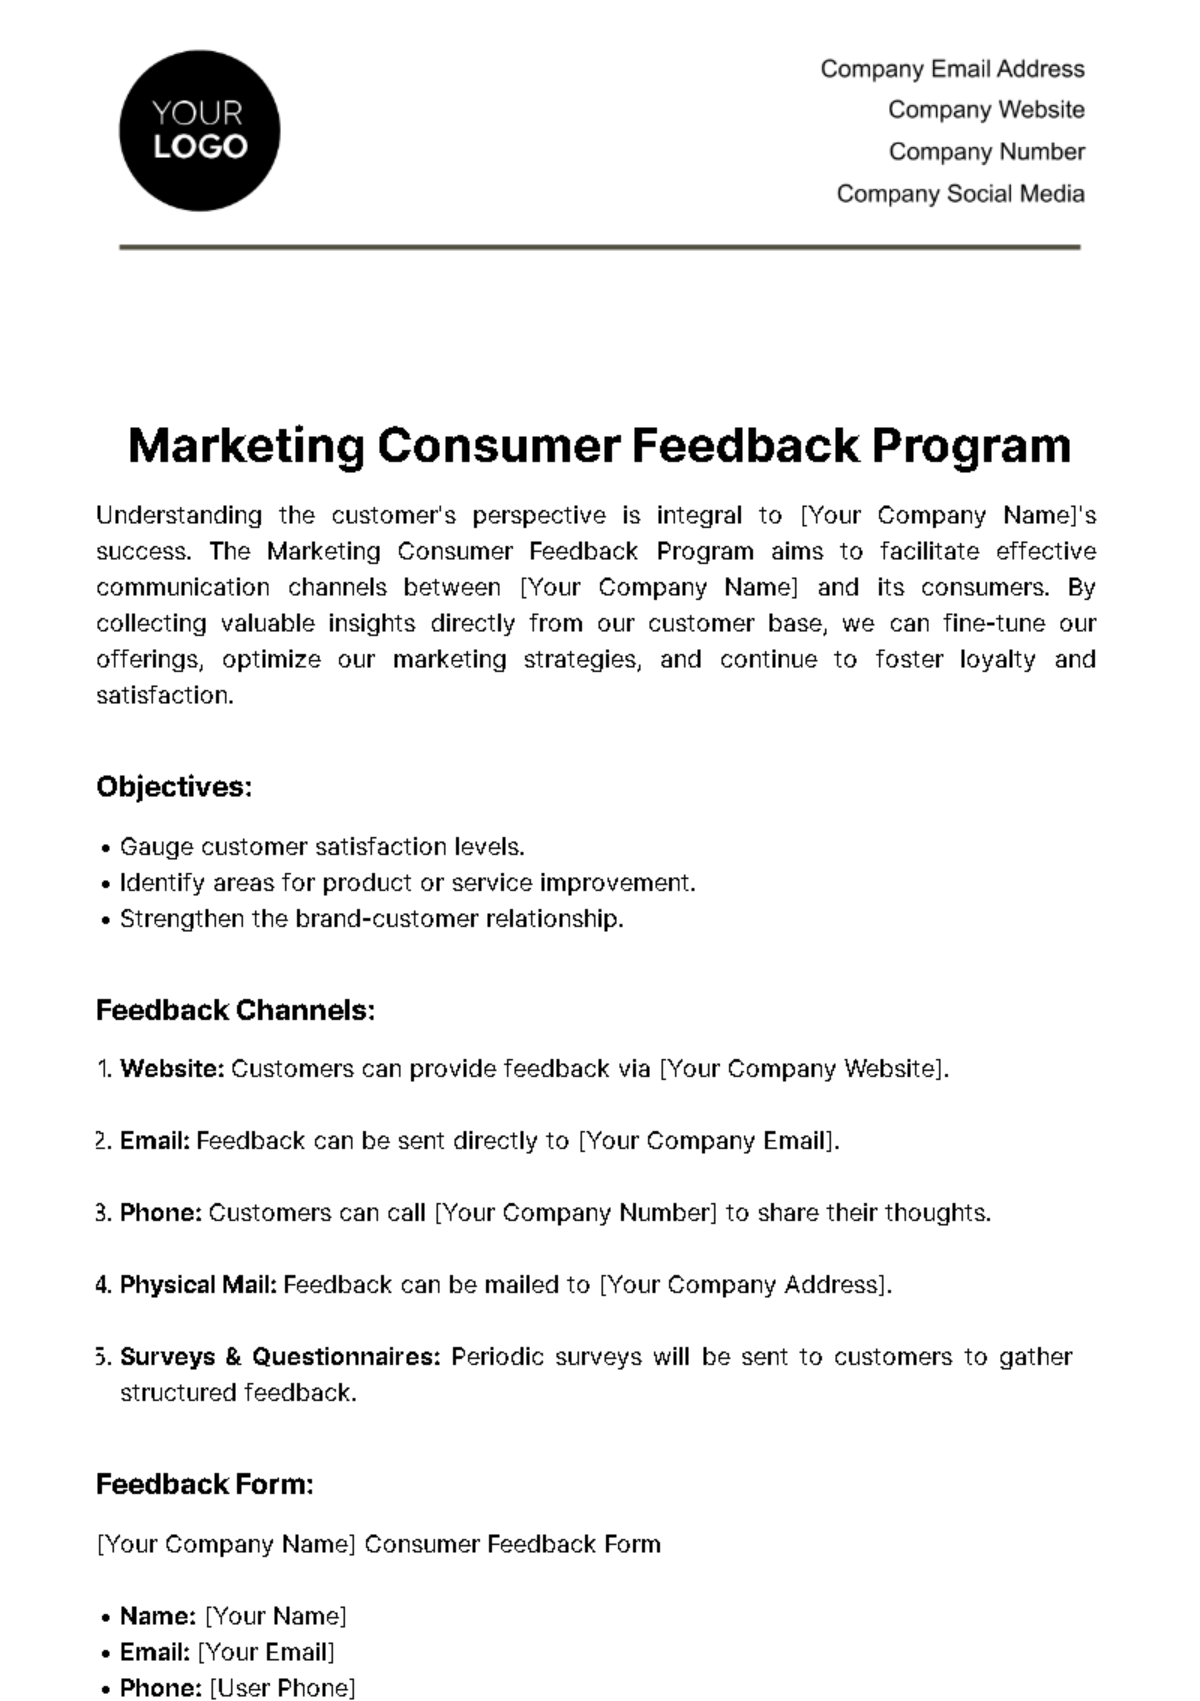 Free Marketing Consumer Feedback Program Template